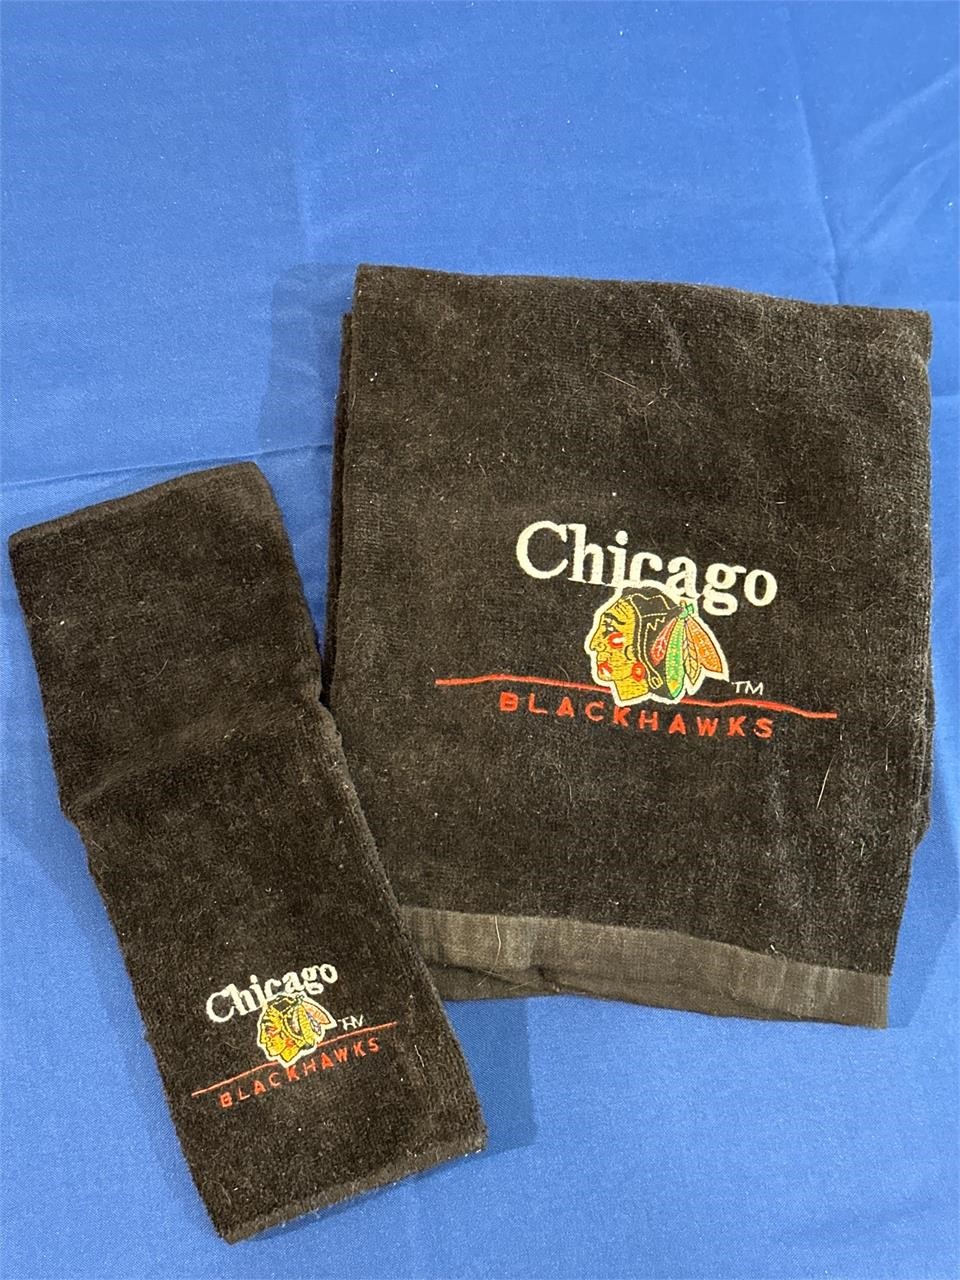 Chicago Blackhawks Towel and wash rag set